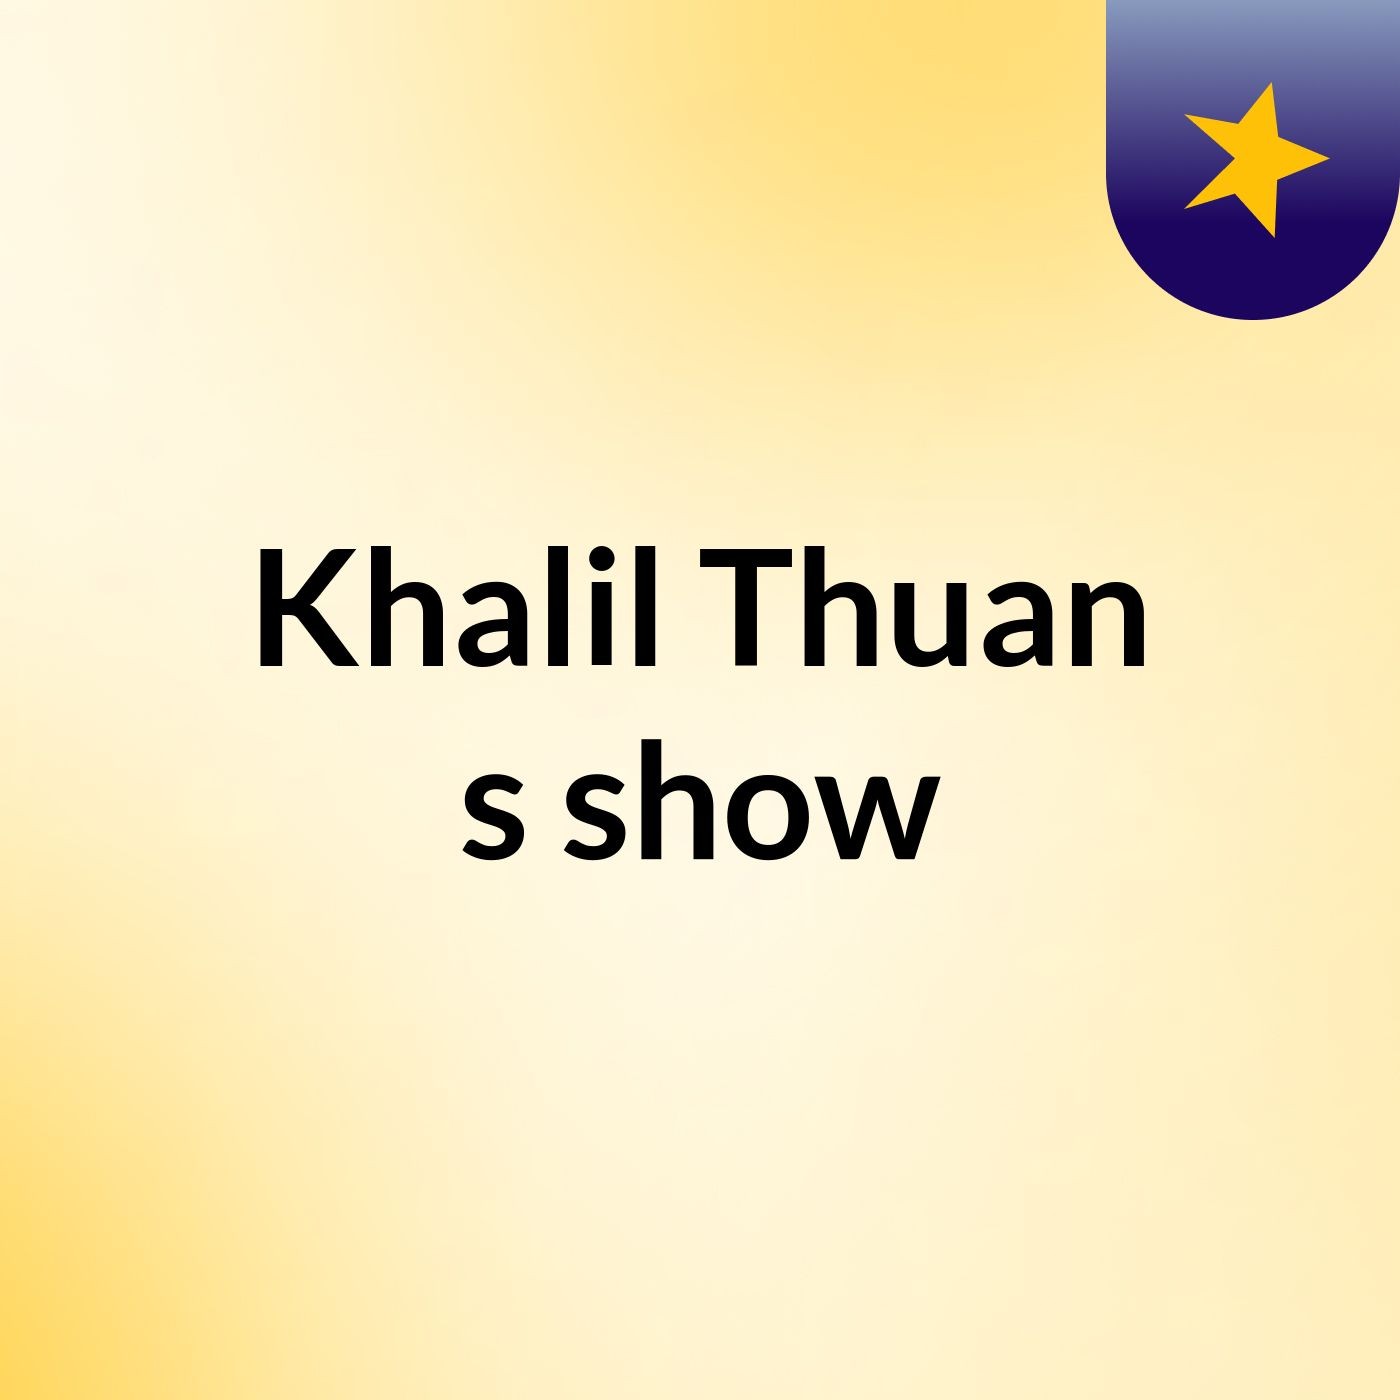 Khalil Thuan's show